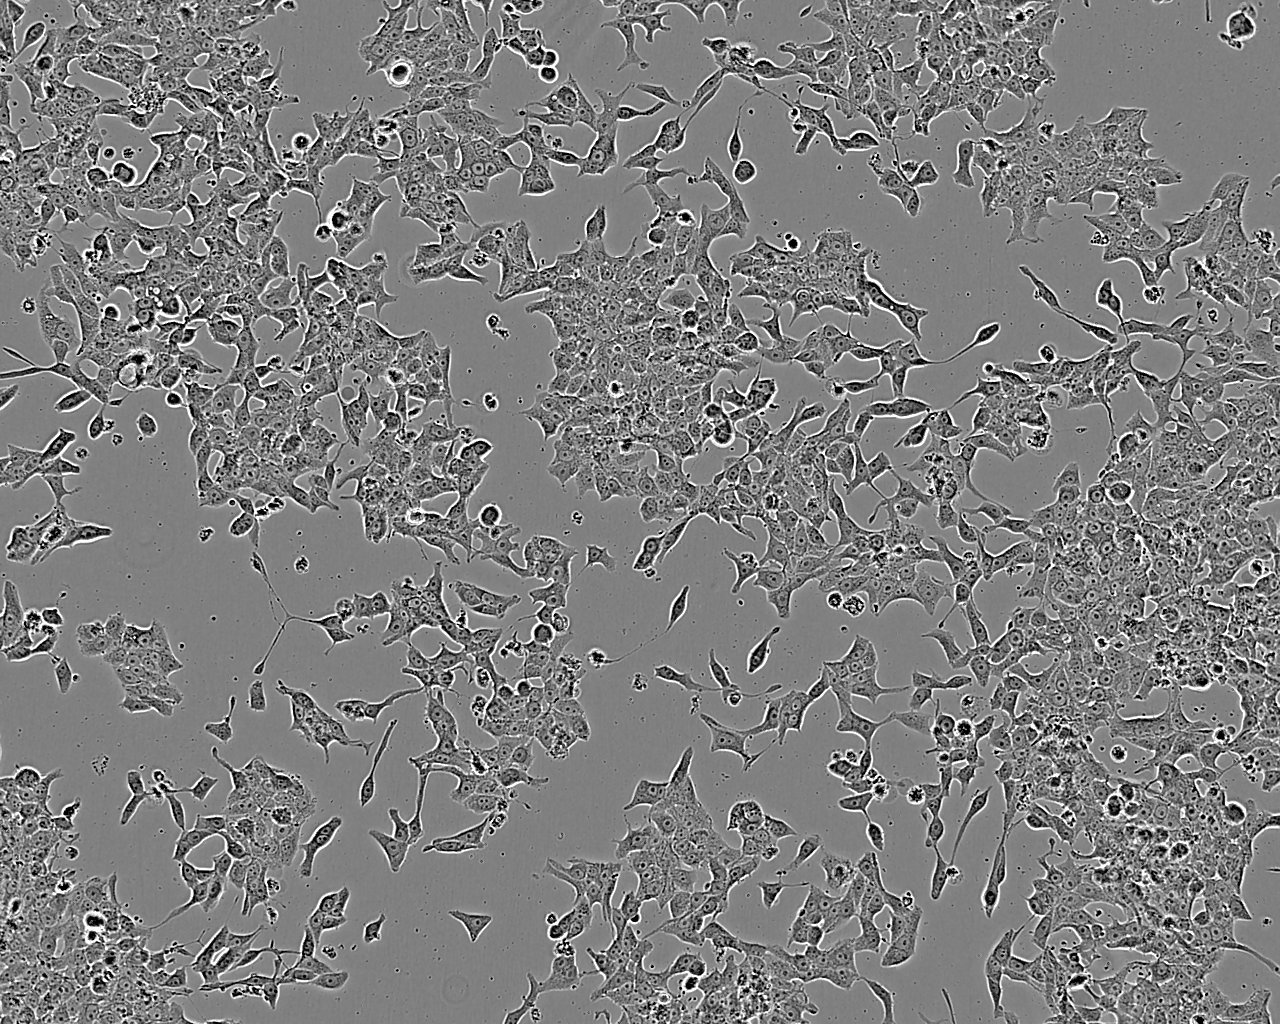 NCI-H28 Cells|人恶性间皮瘤细胞系,NCI-H28 Cells